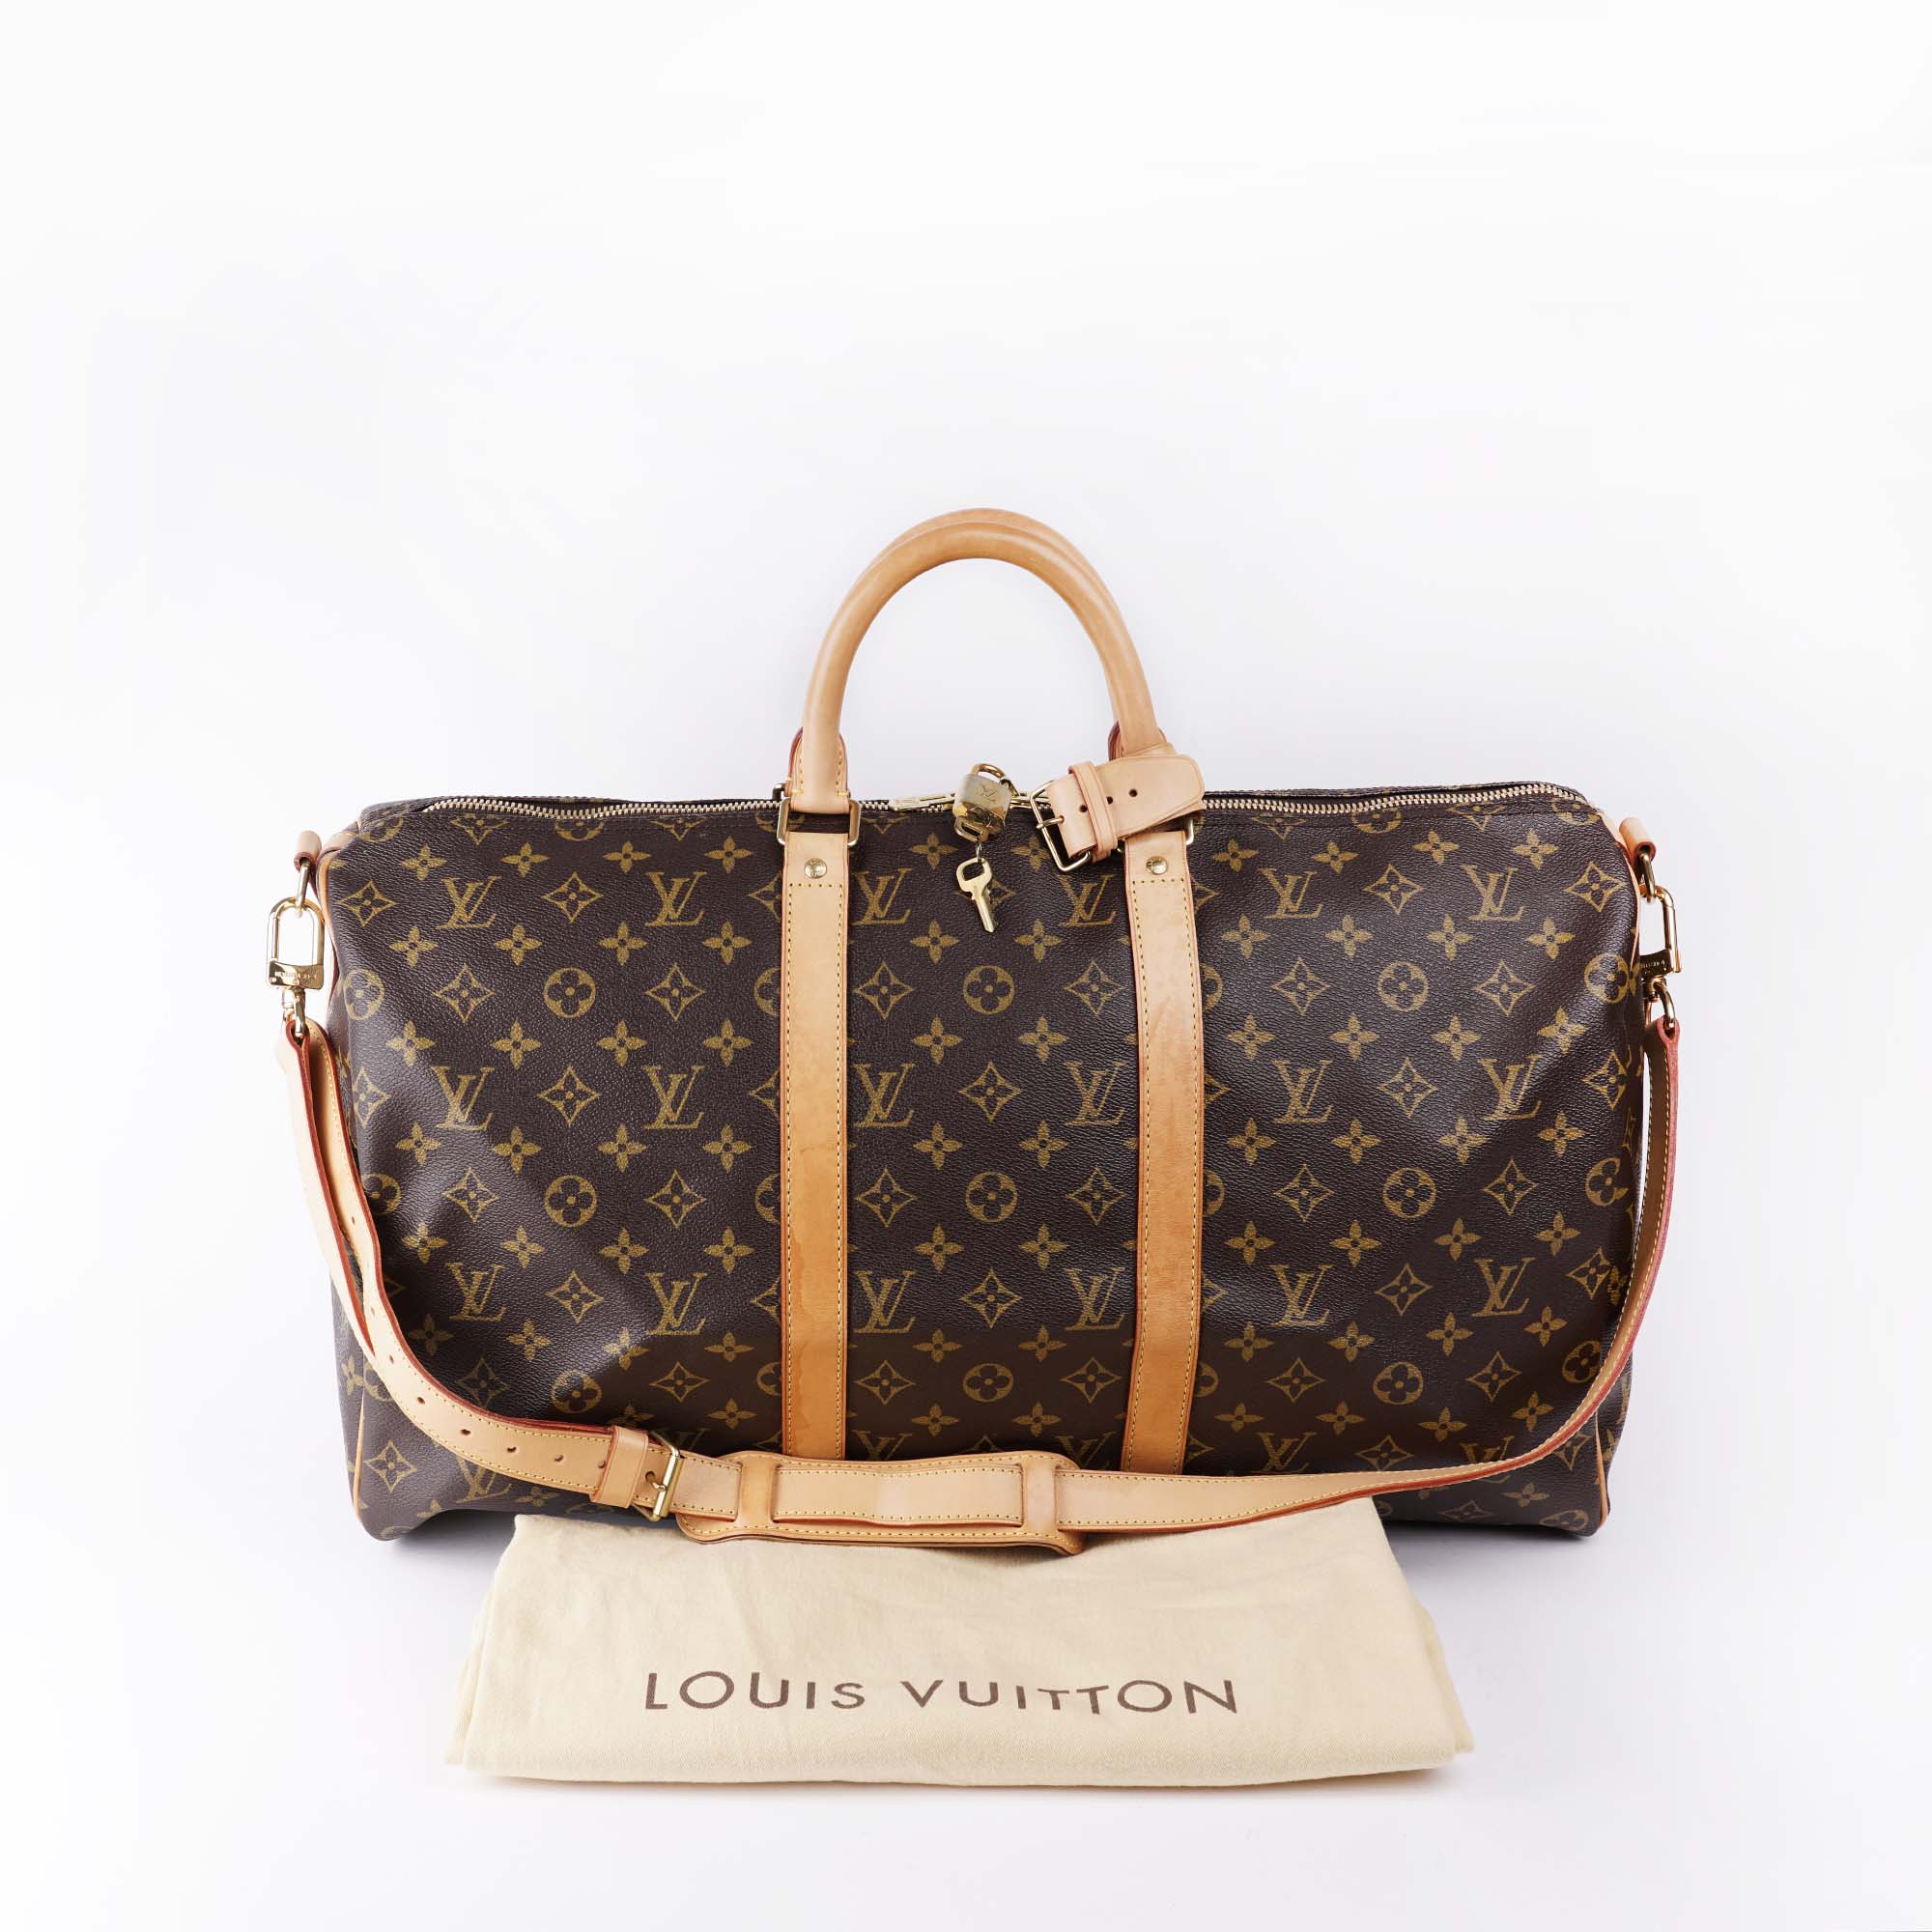 Keepall 50 Bandoulière Bag - LOUIS VUITTON - Affordable Luxury image